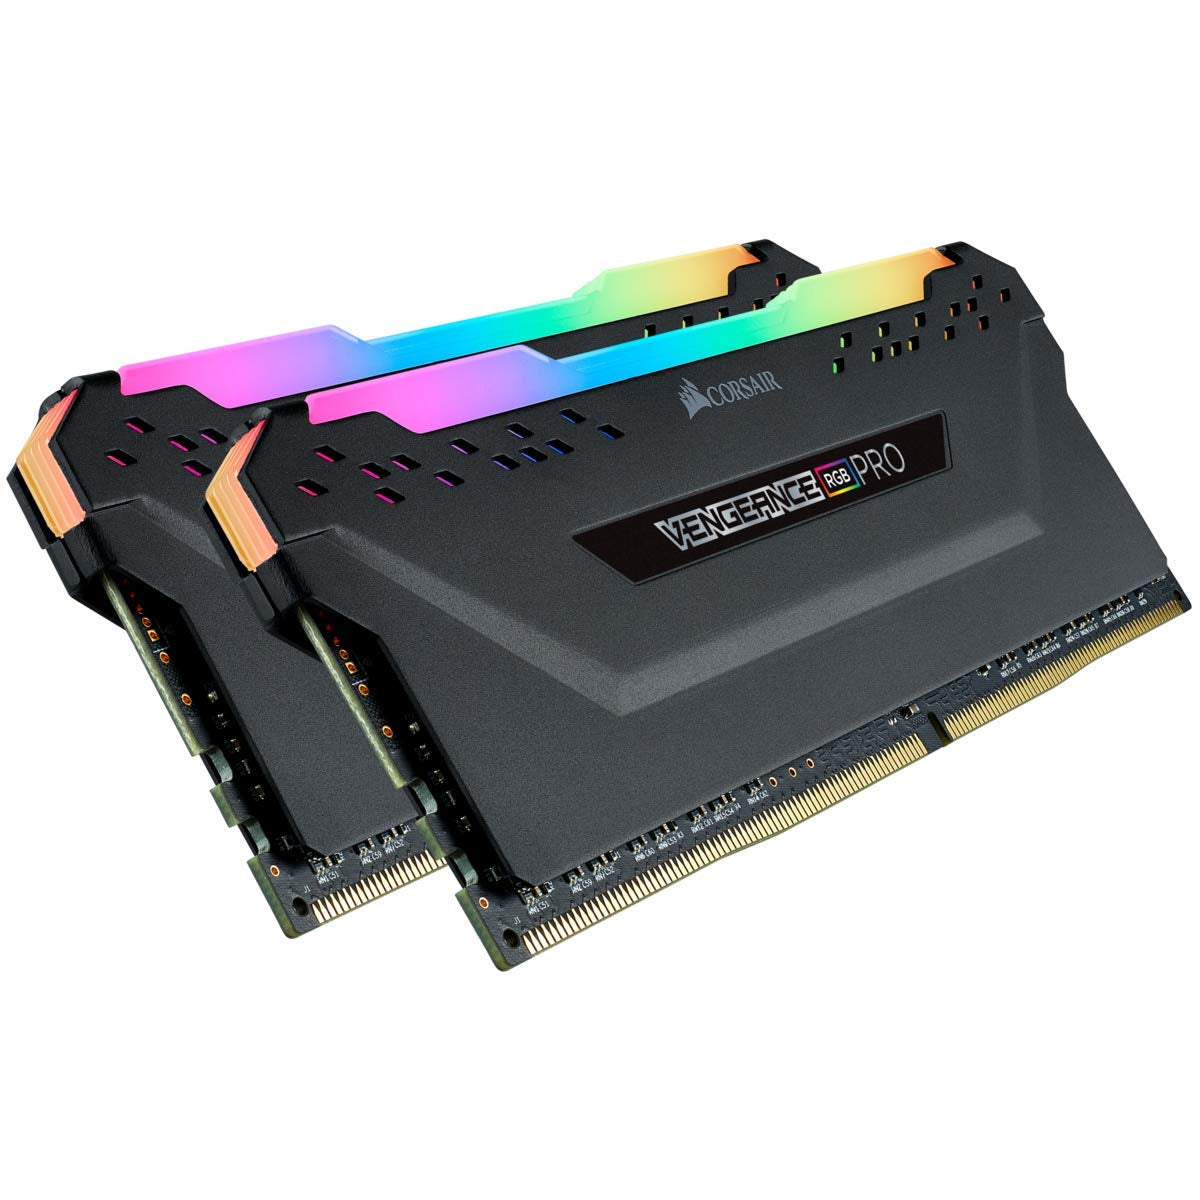 Corsair Vengeance RGB Pro RAM DDR4 3000MHz 288 पिन UDIMM डेस्कटॉप मेमोरी किट